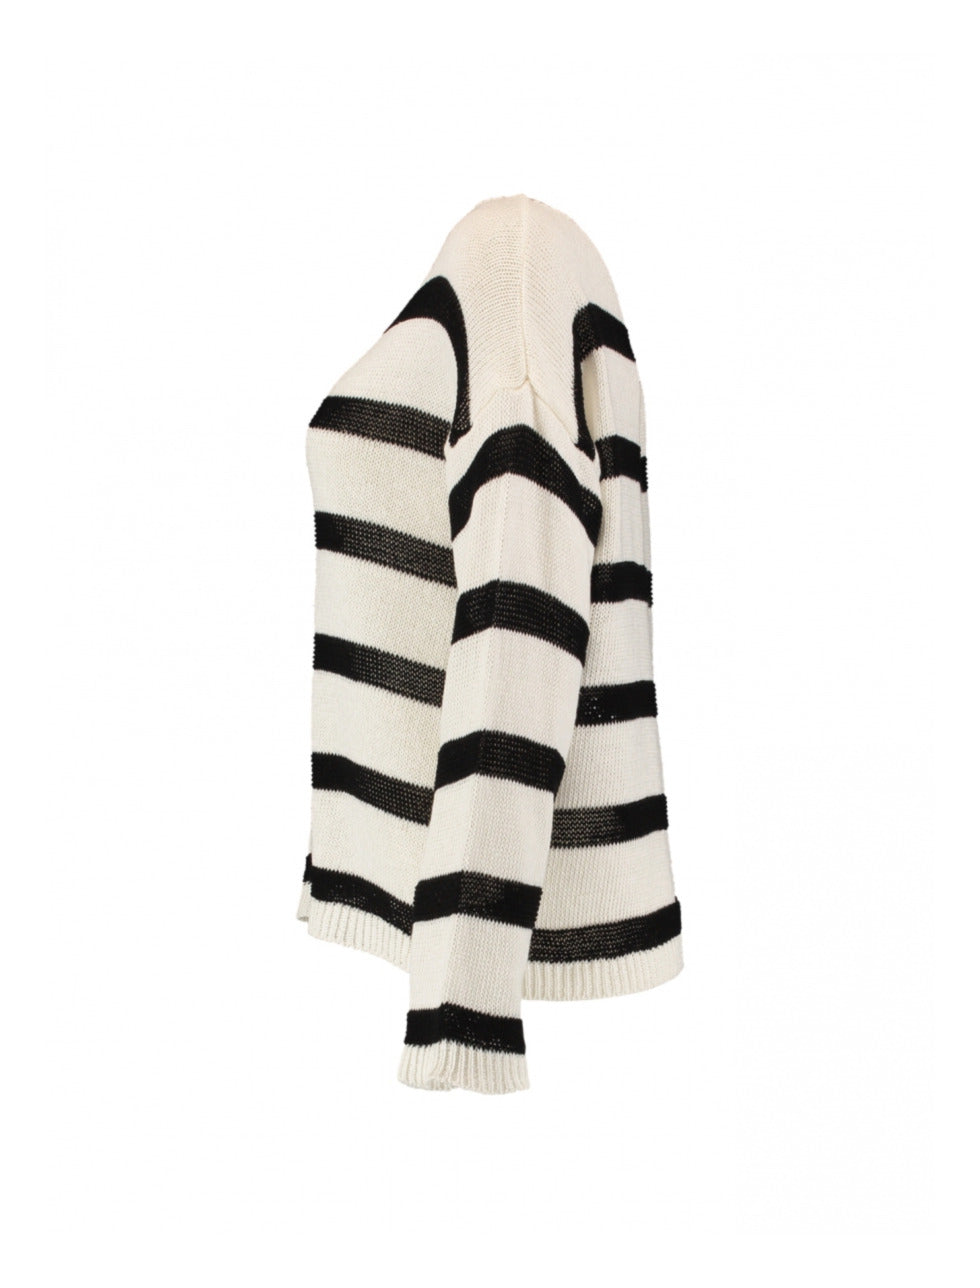 Rela Black Stripe White Sweater